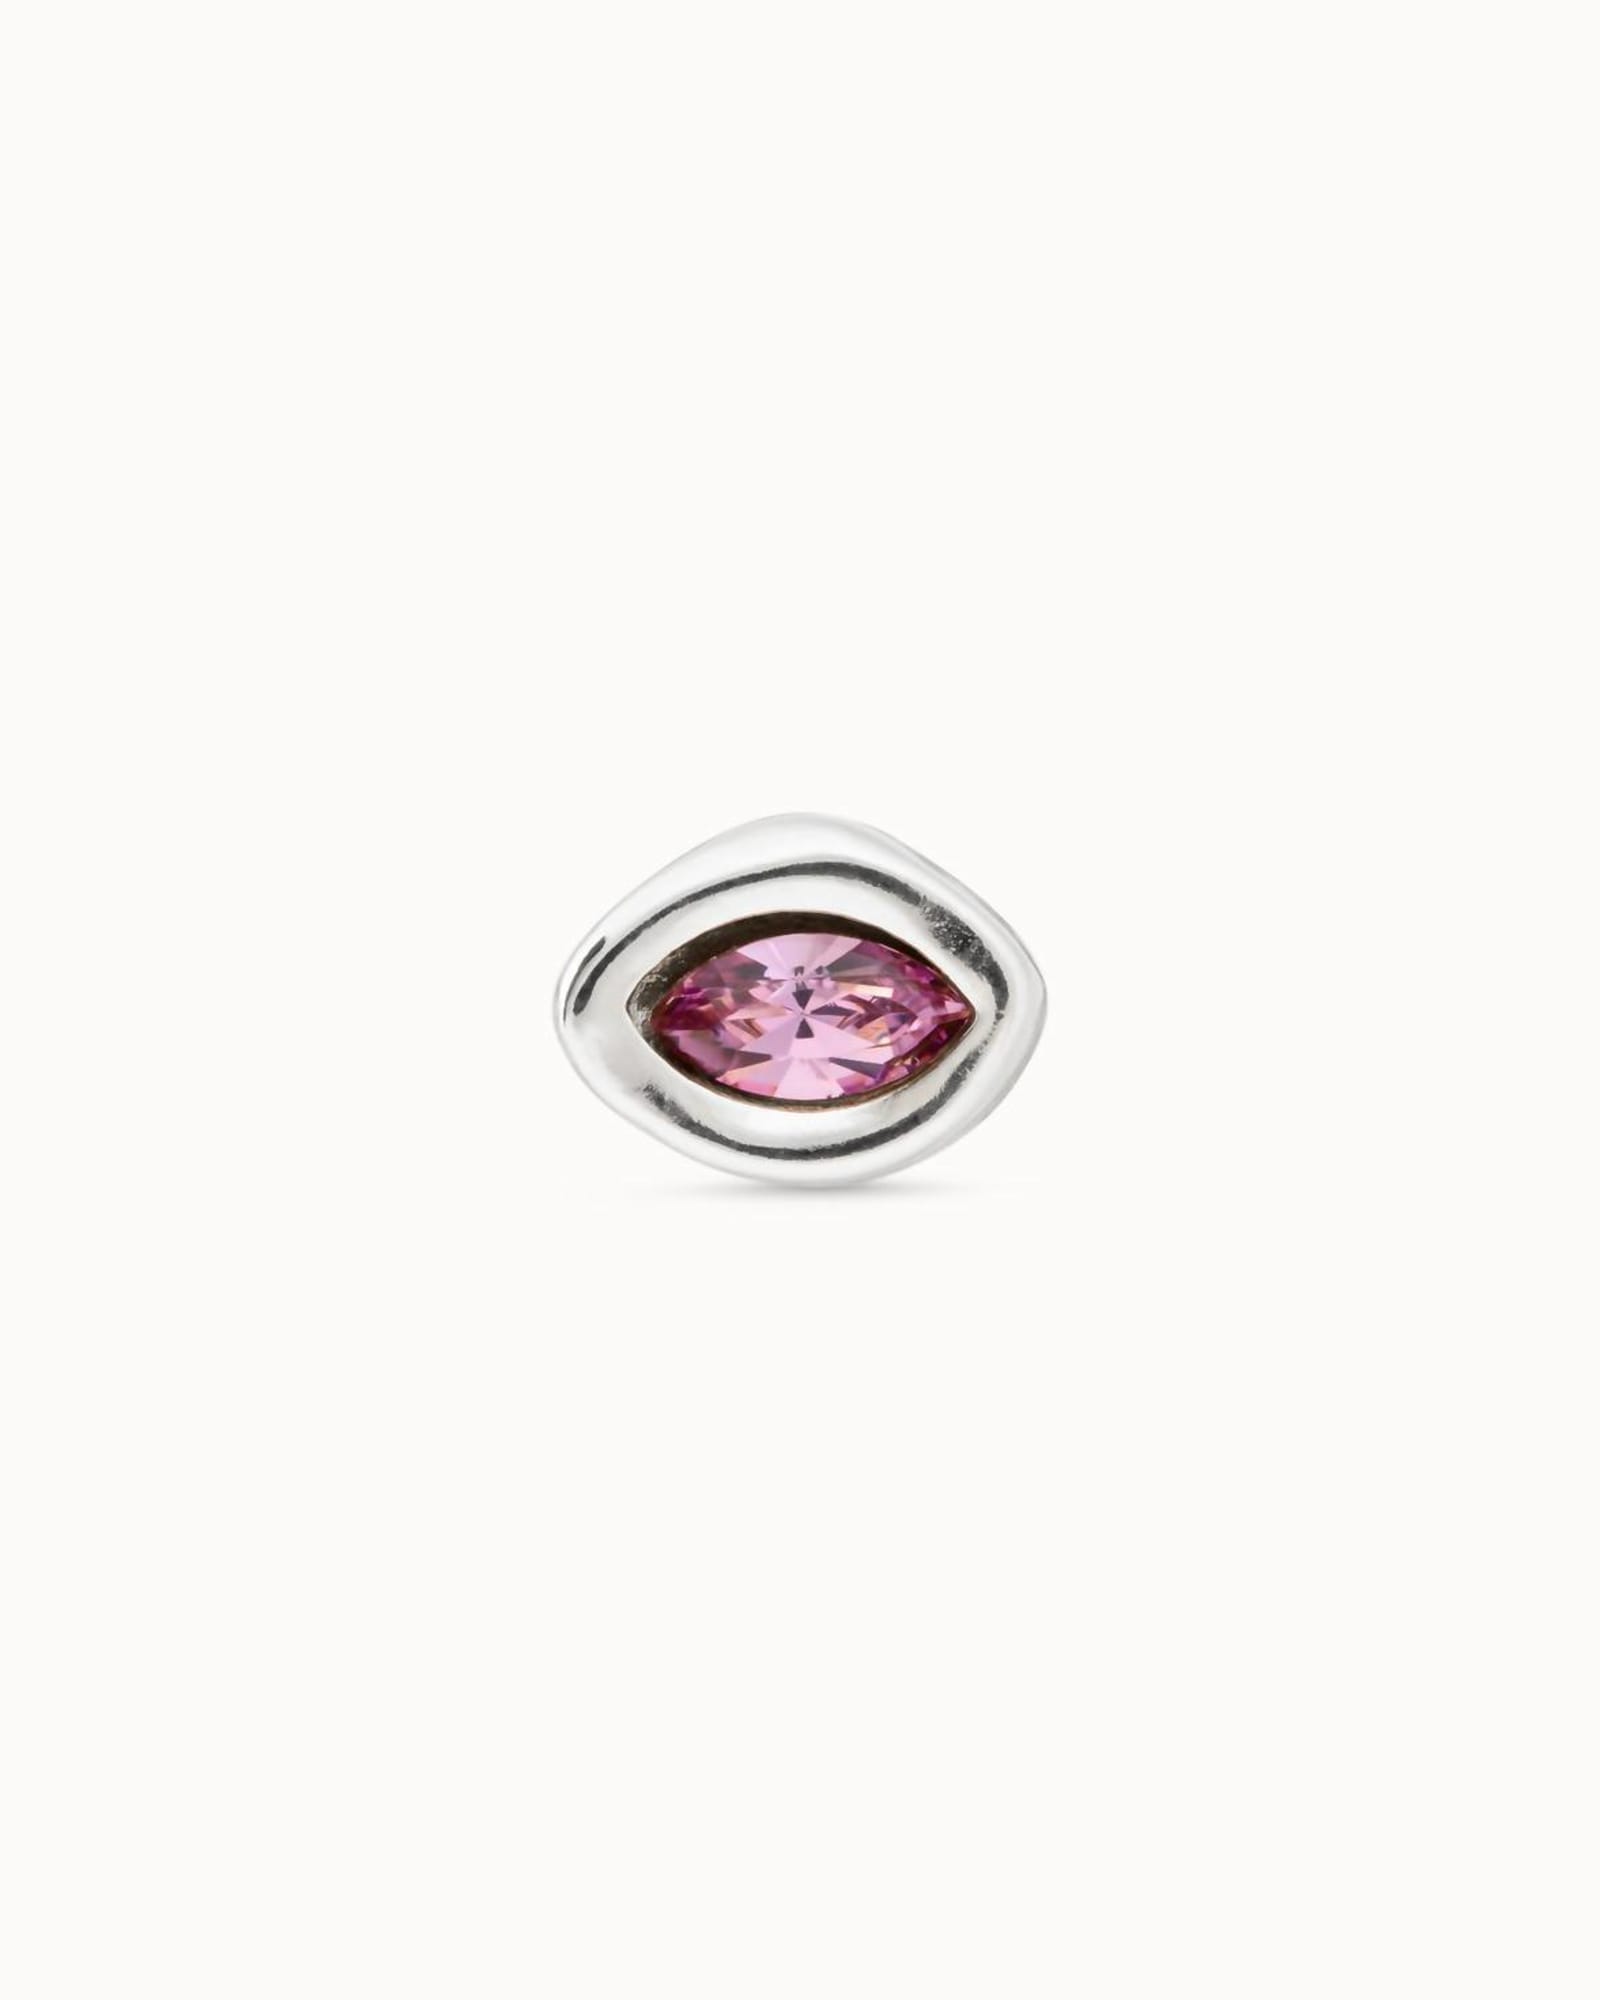 Piercing Stud With Faceted Crystal Earrings in Rose | Rose